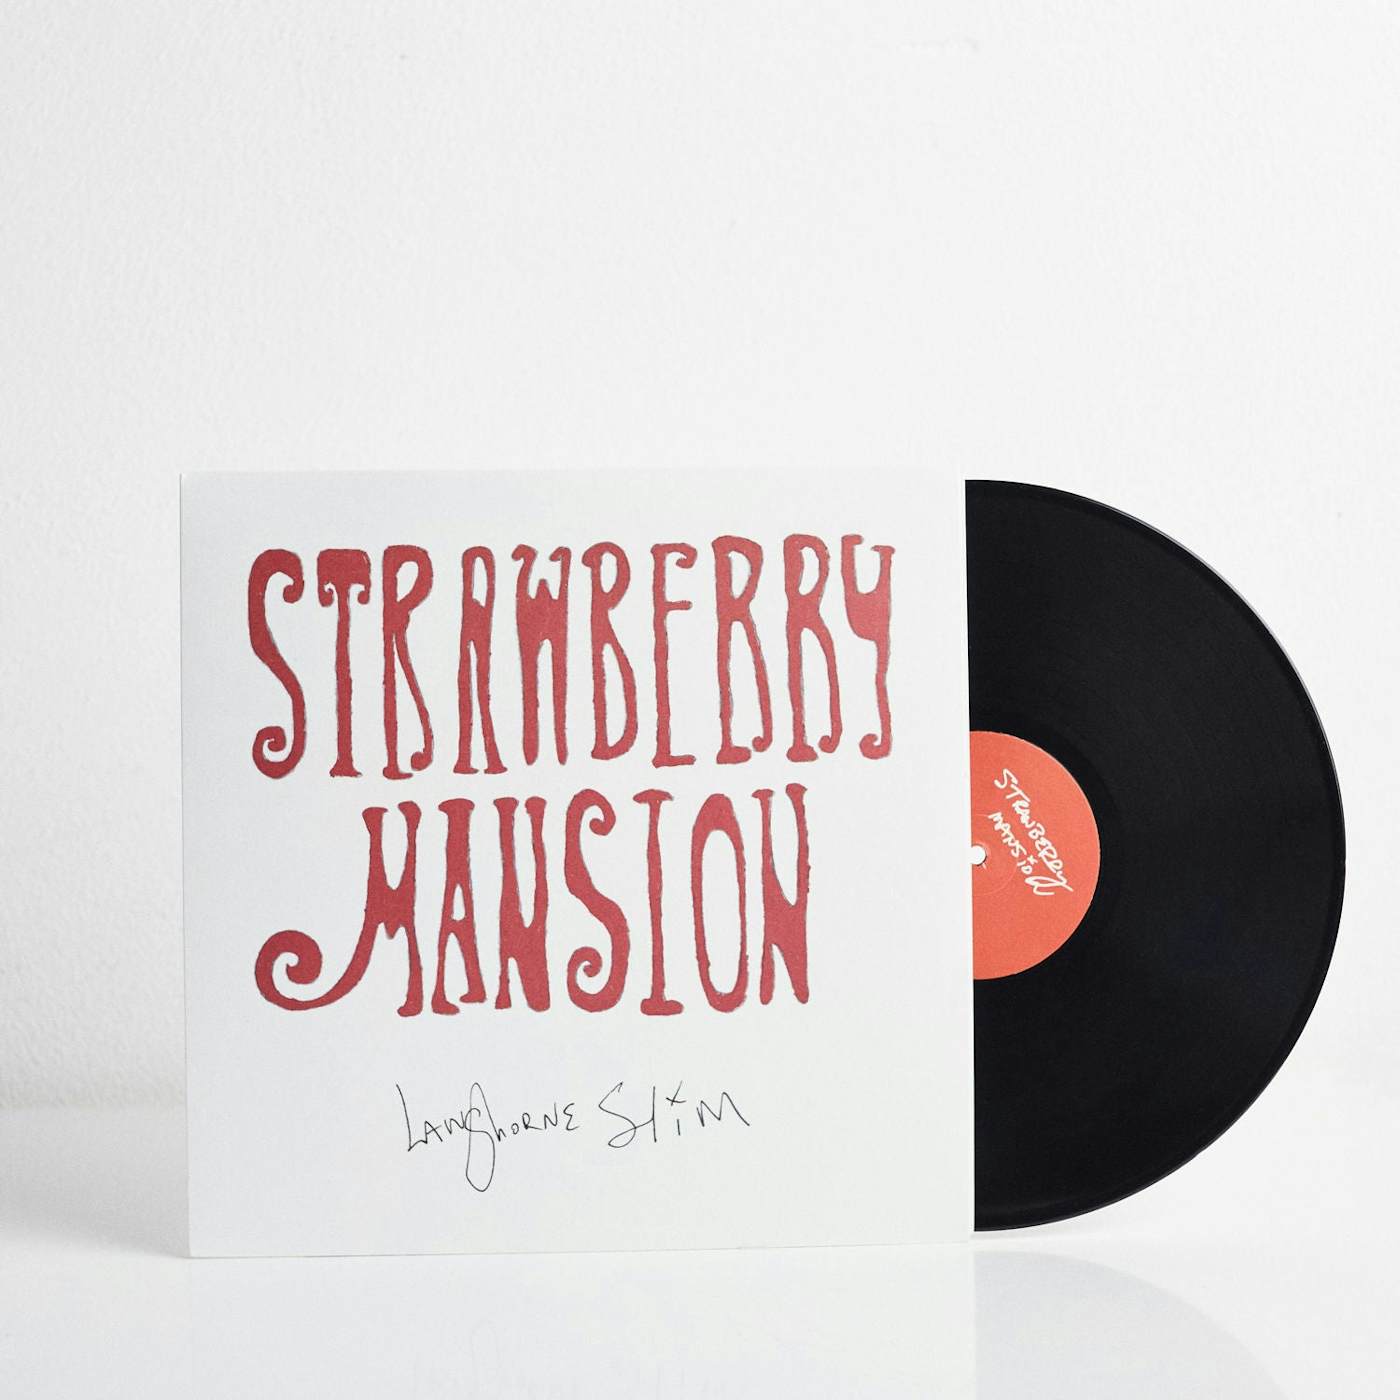 Langhorne Slim Strawberry Mansion (Vinyl)